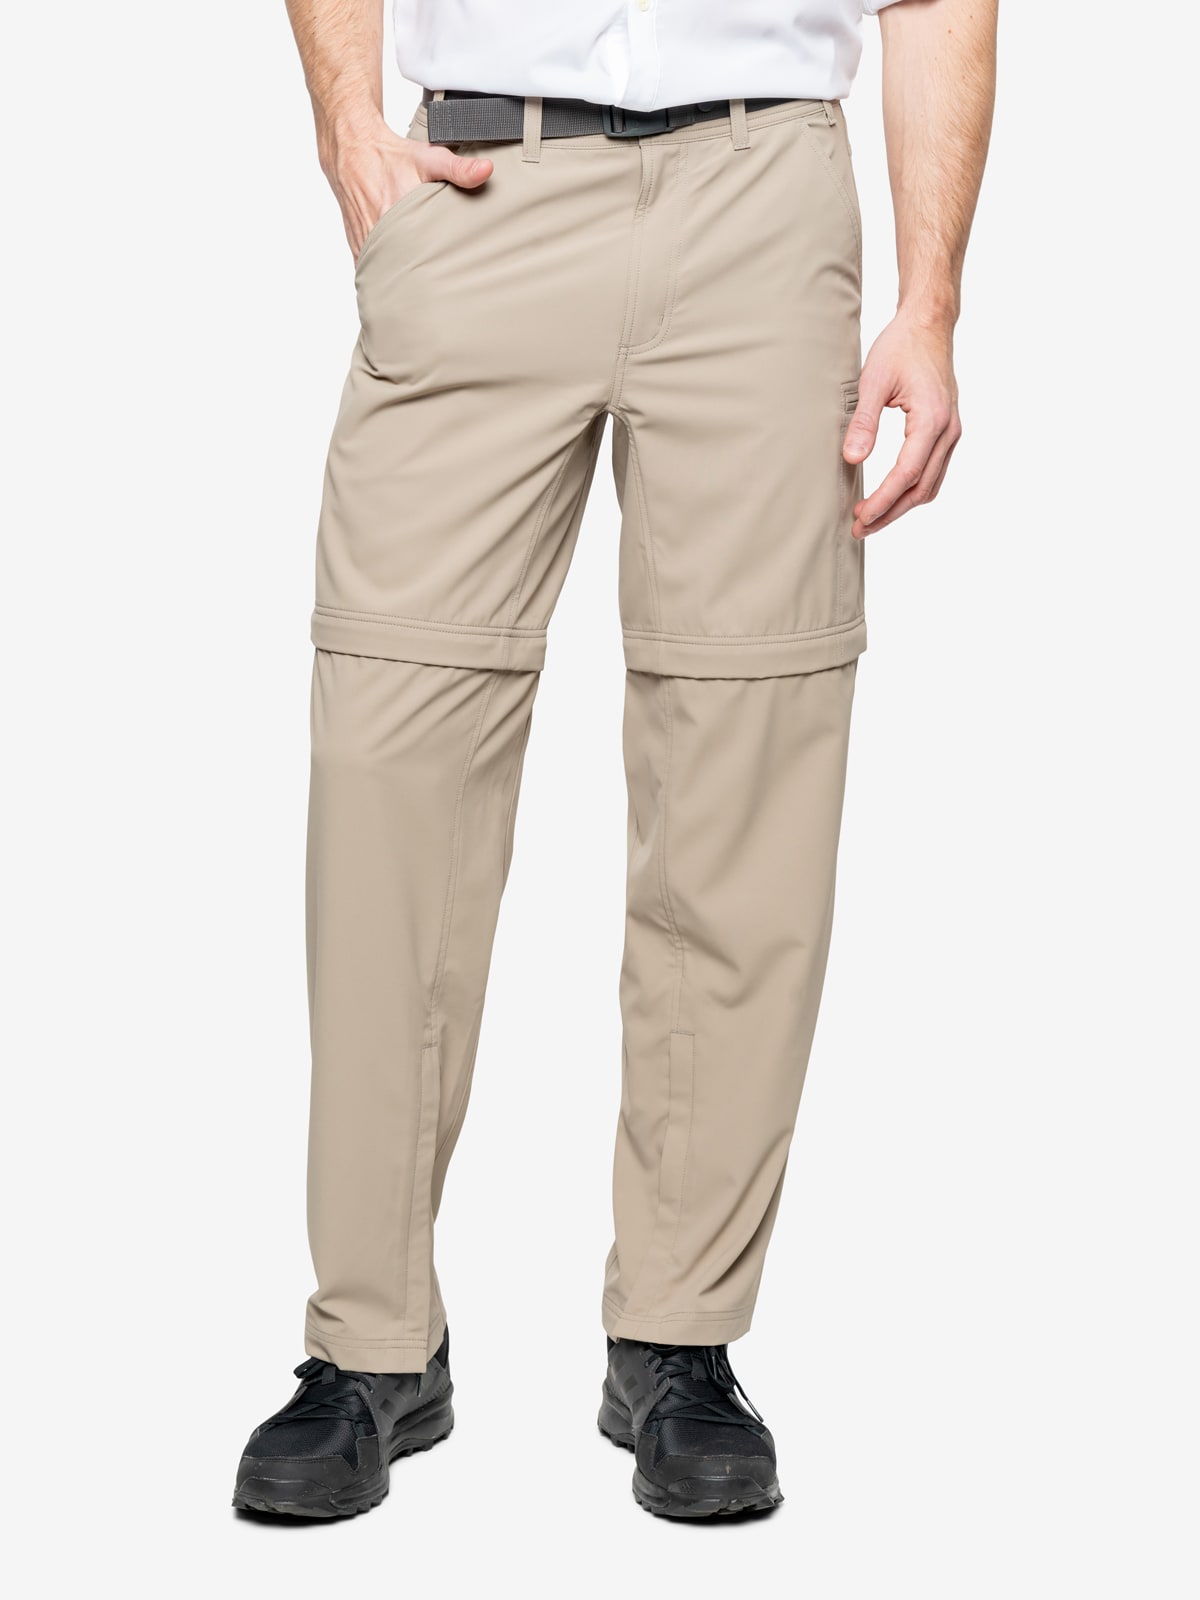 Insect Shield Men's Elements Lite Convertible Pants